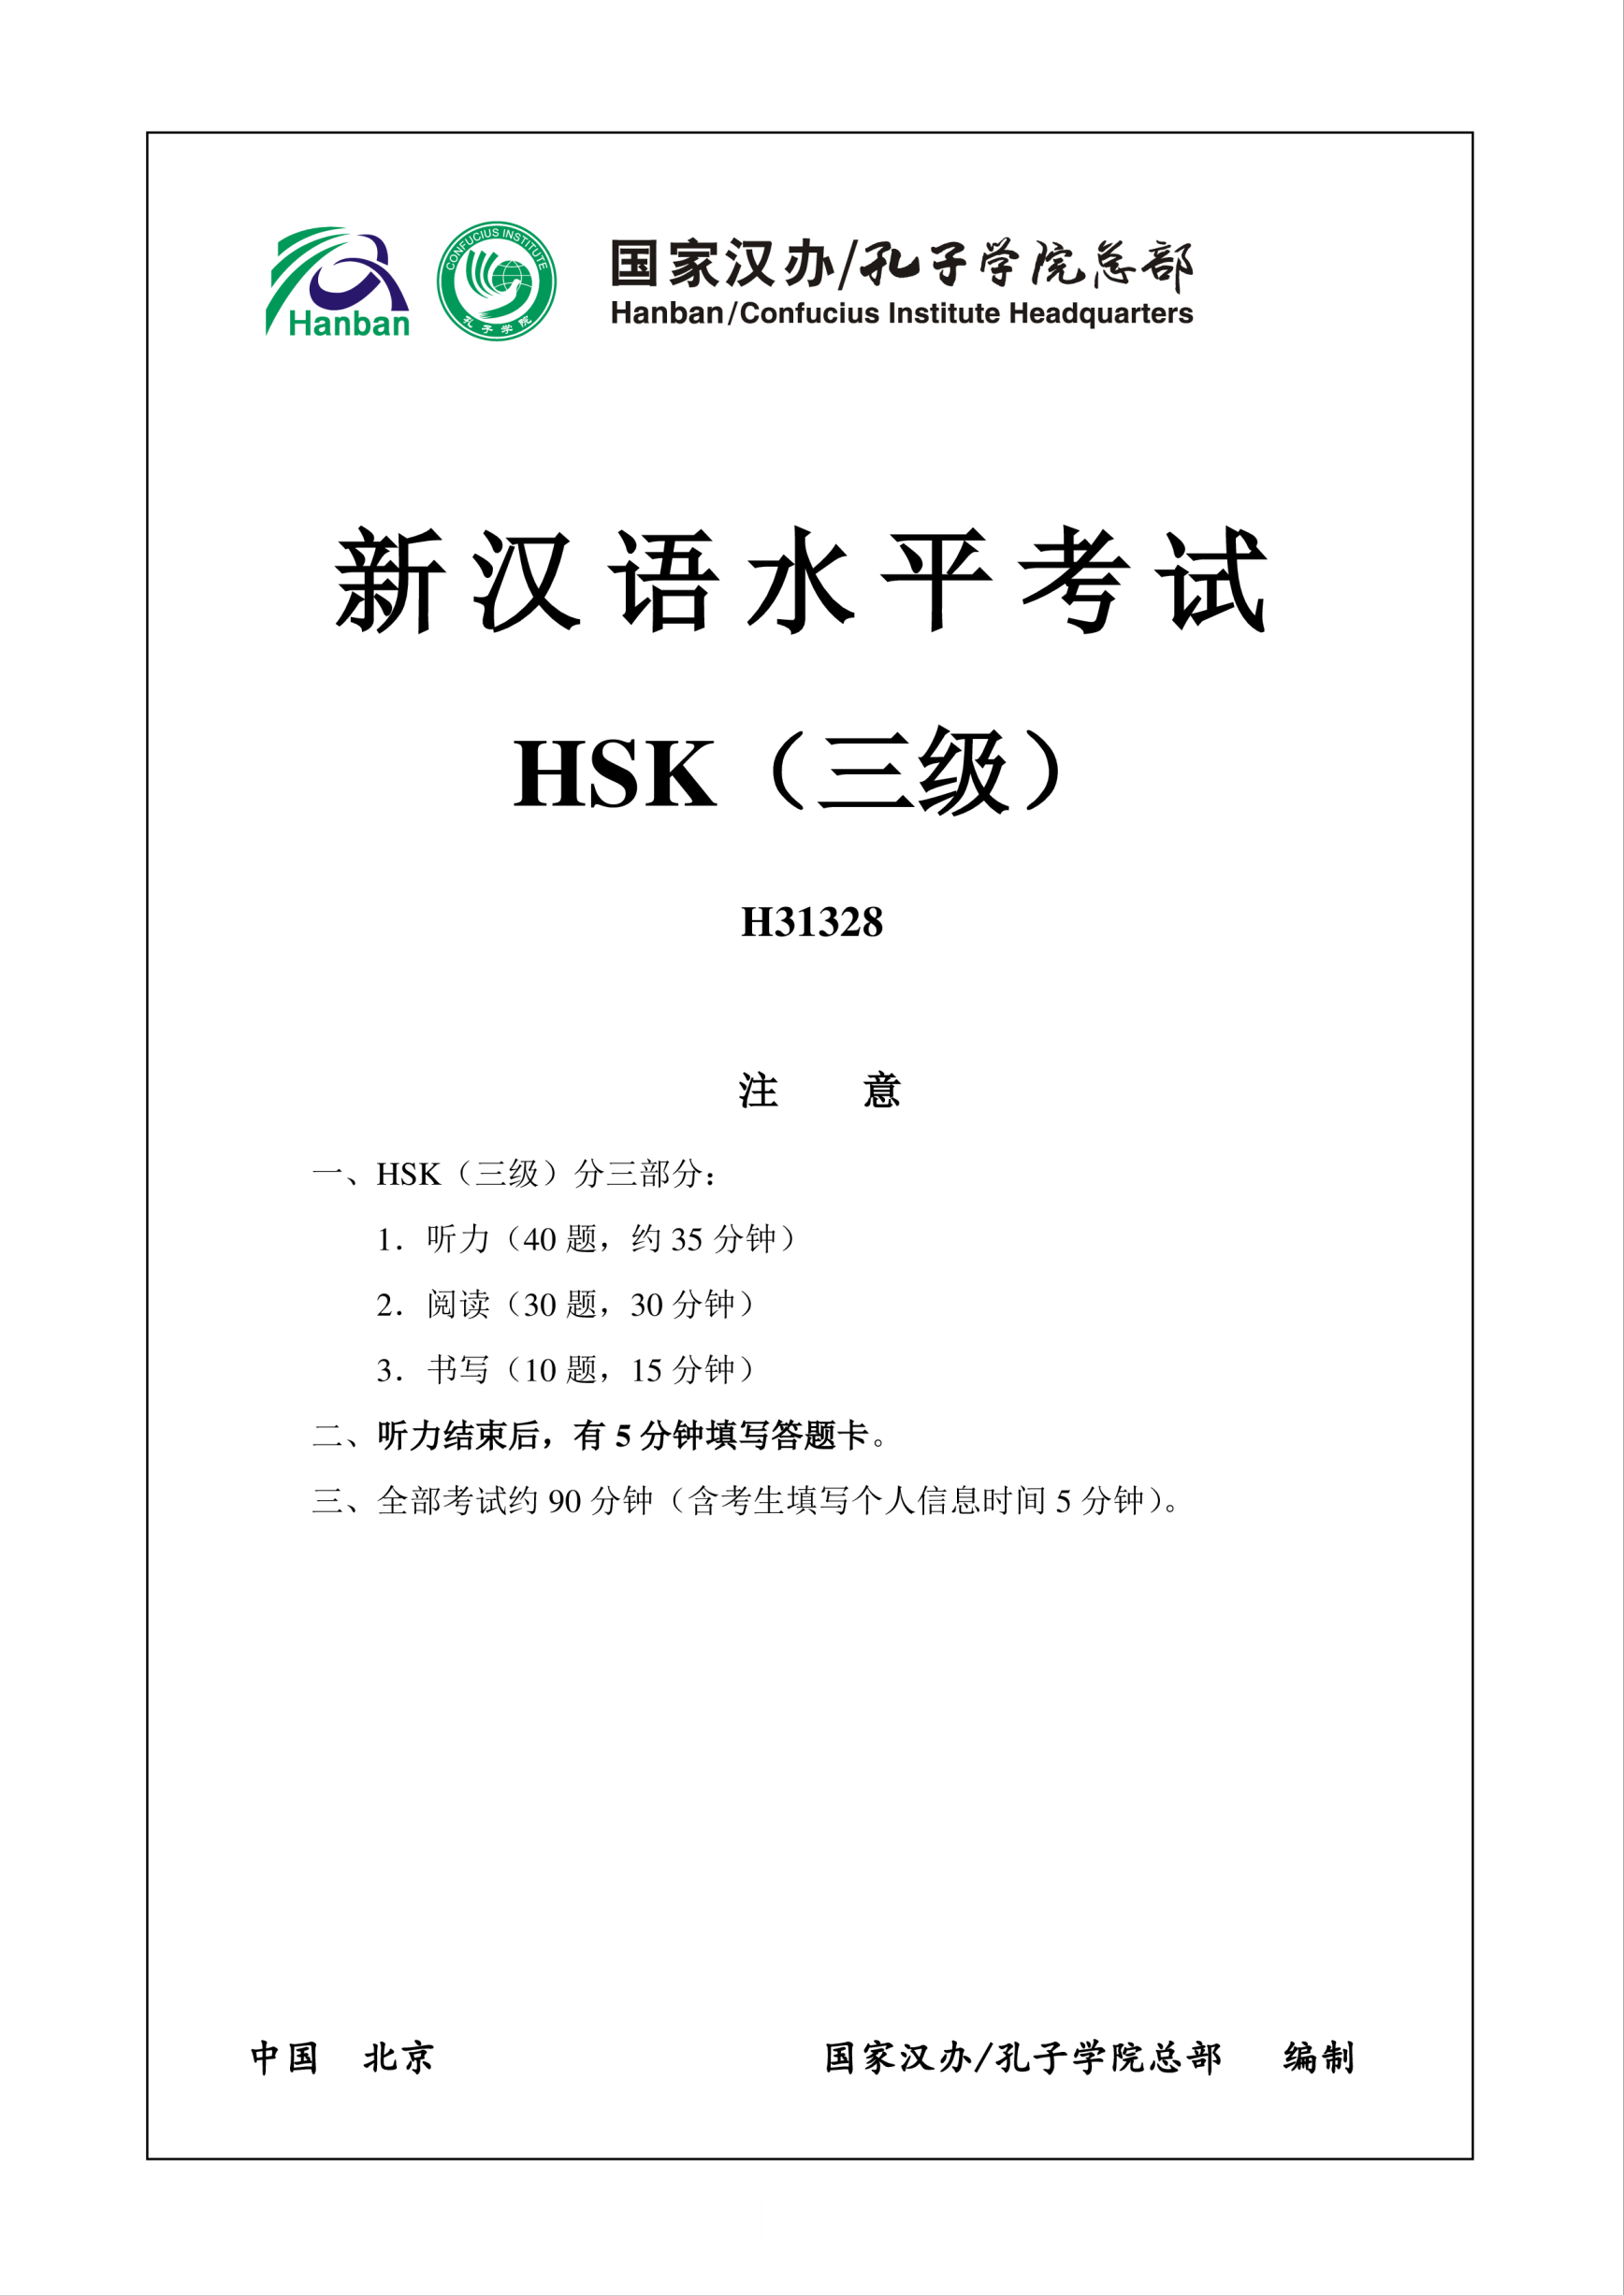 HSK3 H31328 Exam gratis en premium templates